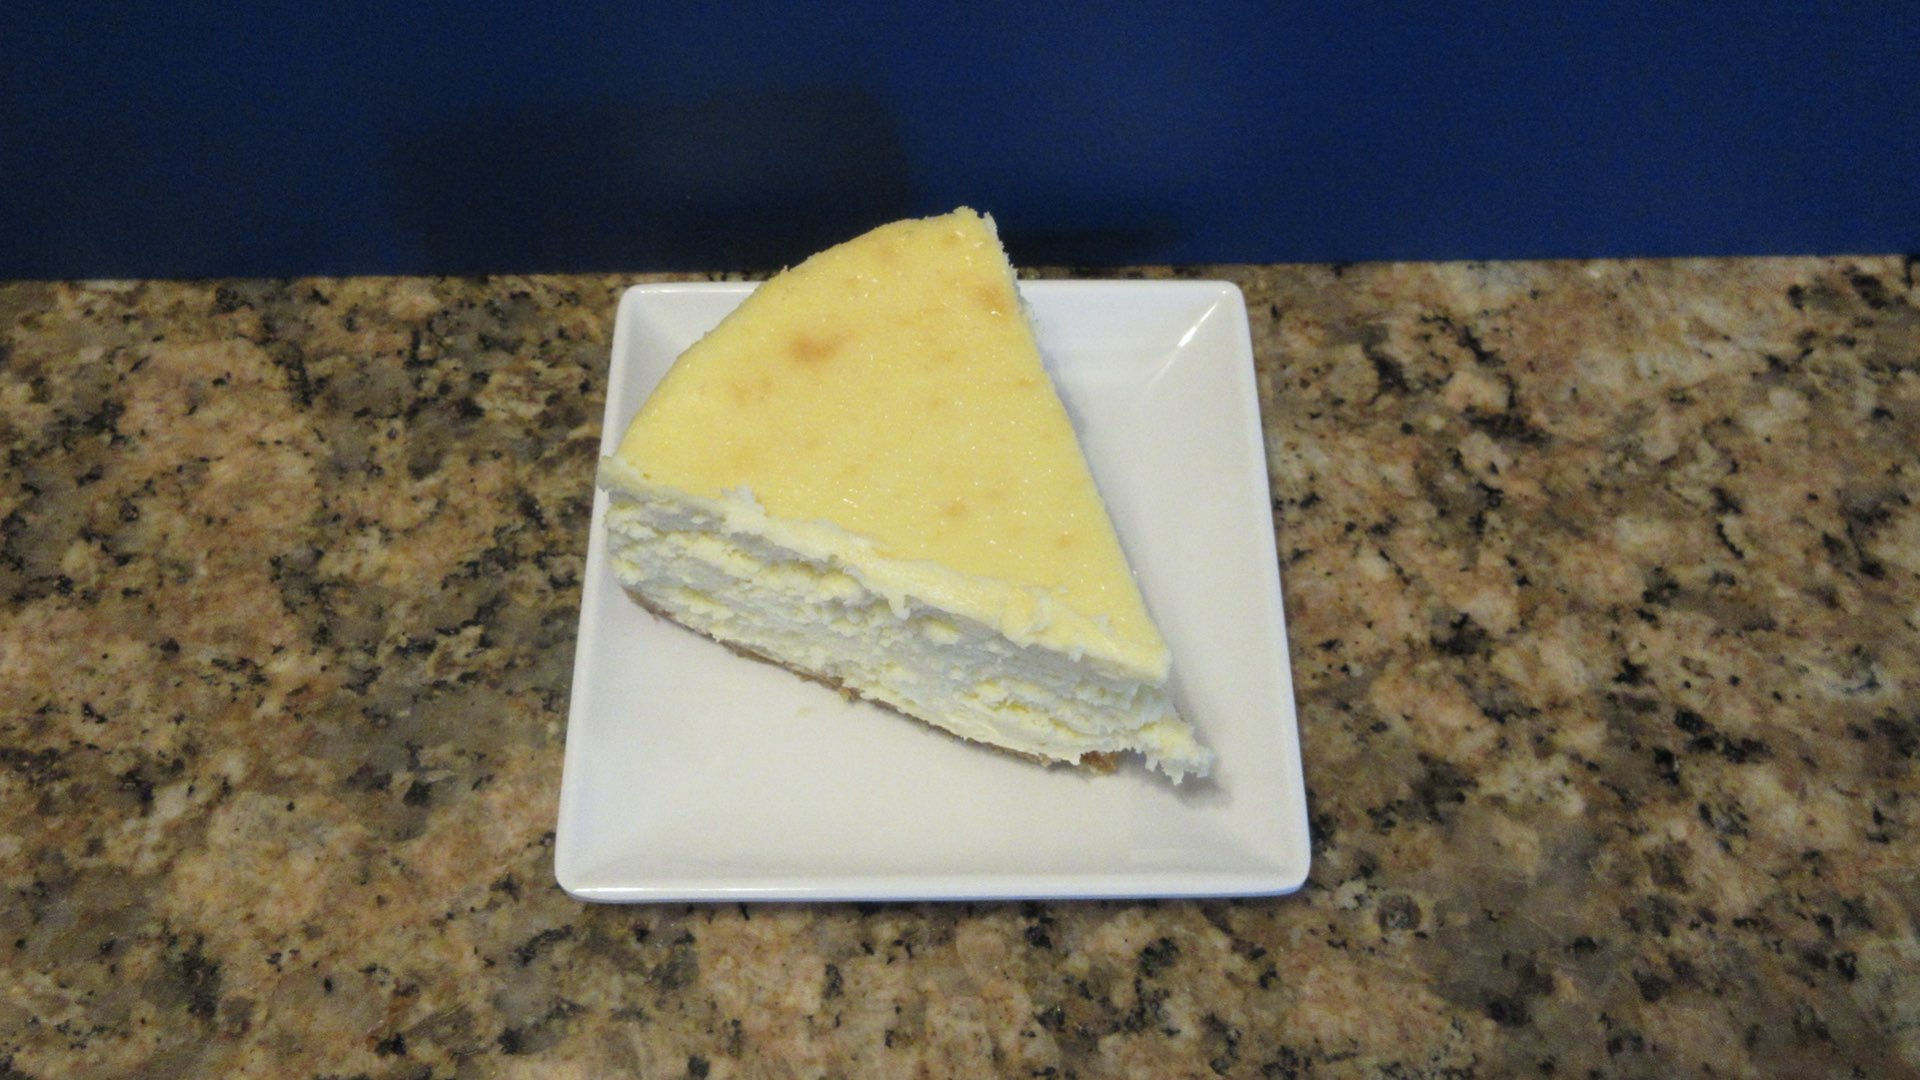 6" cheesecake recipe